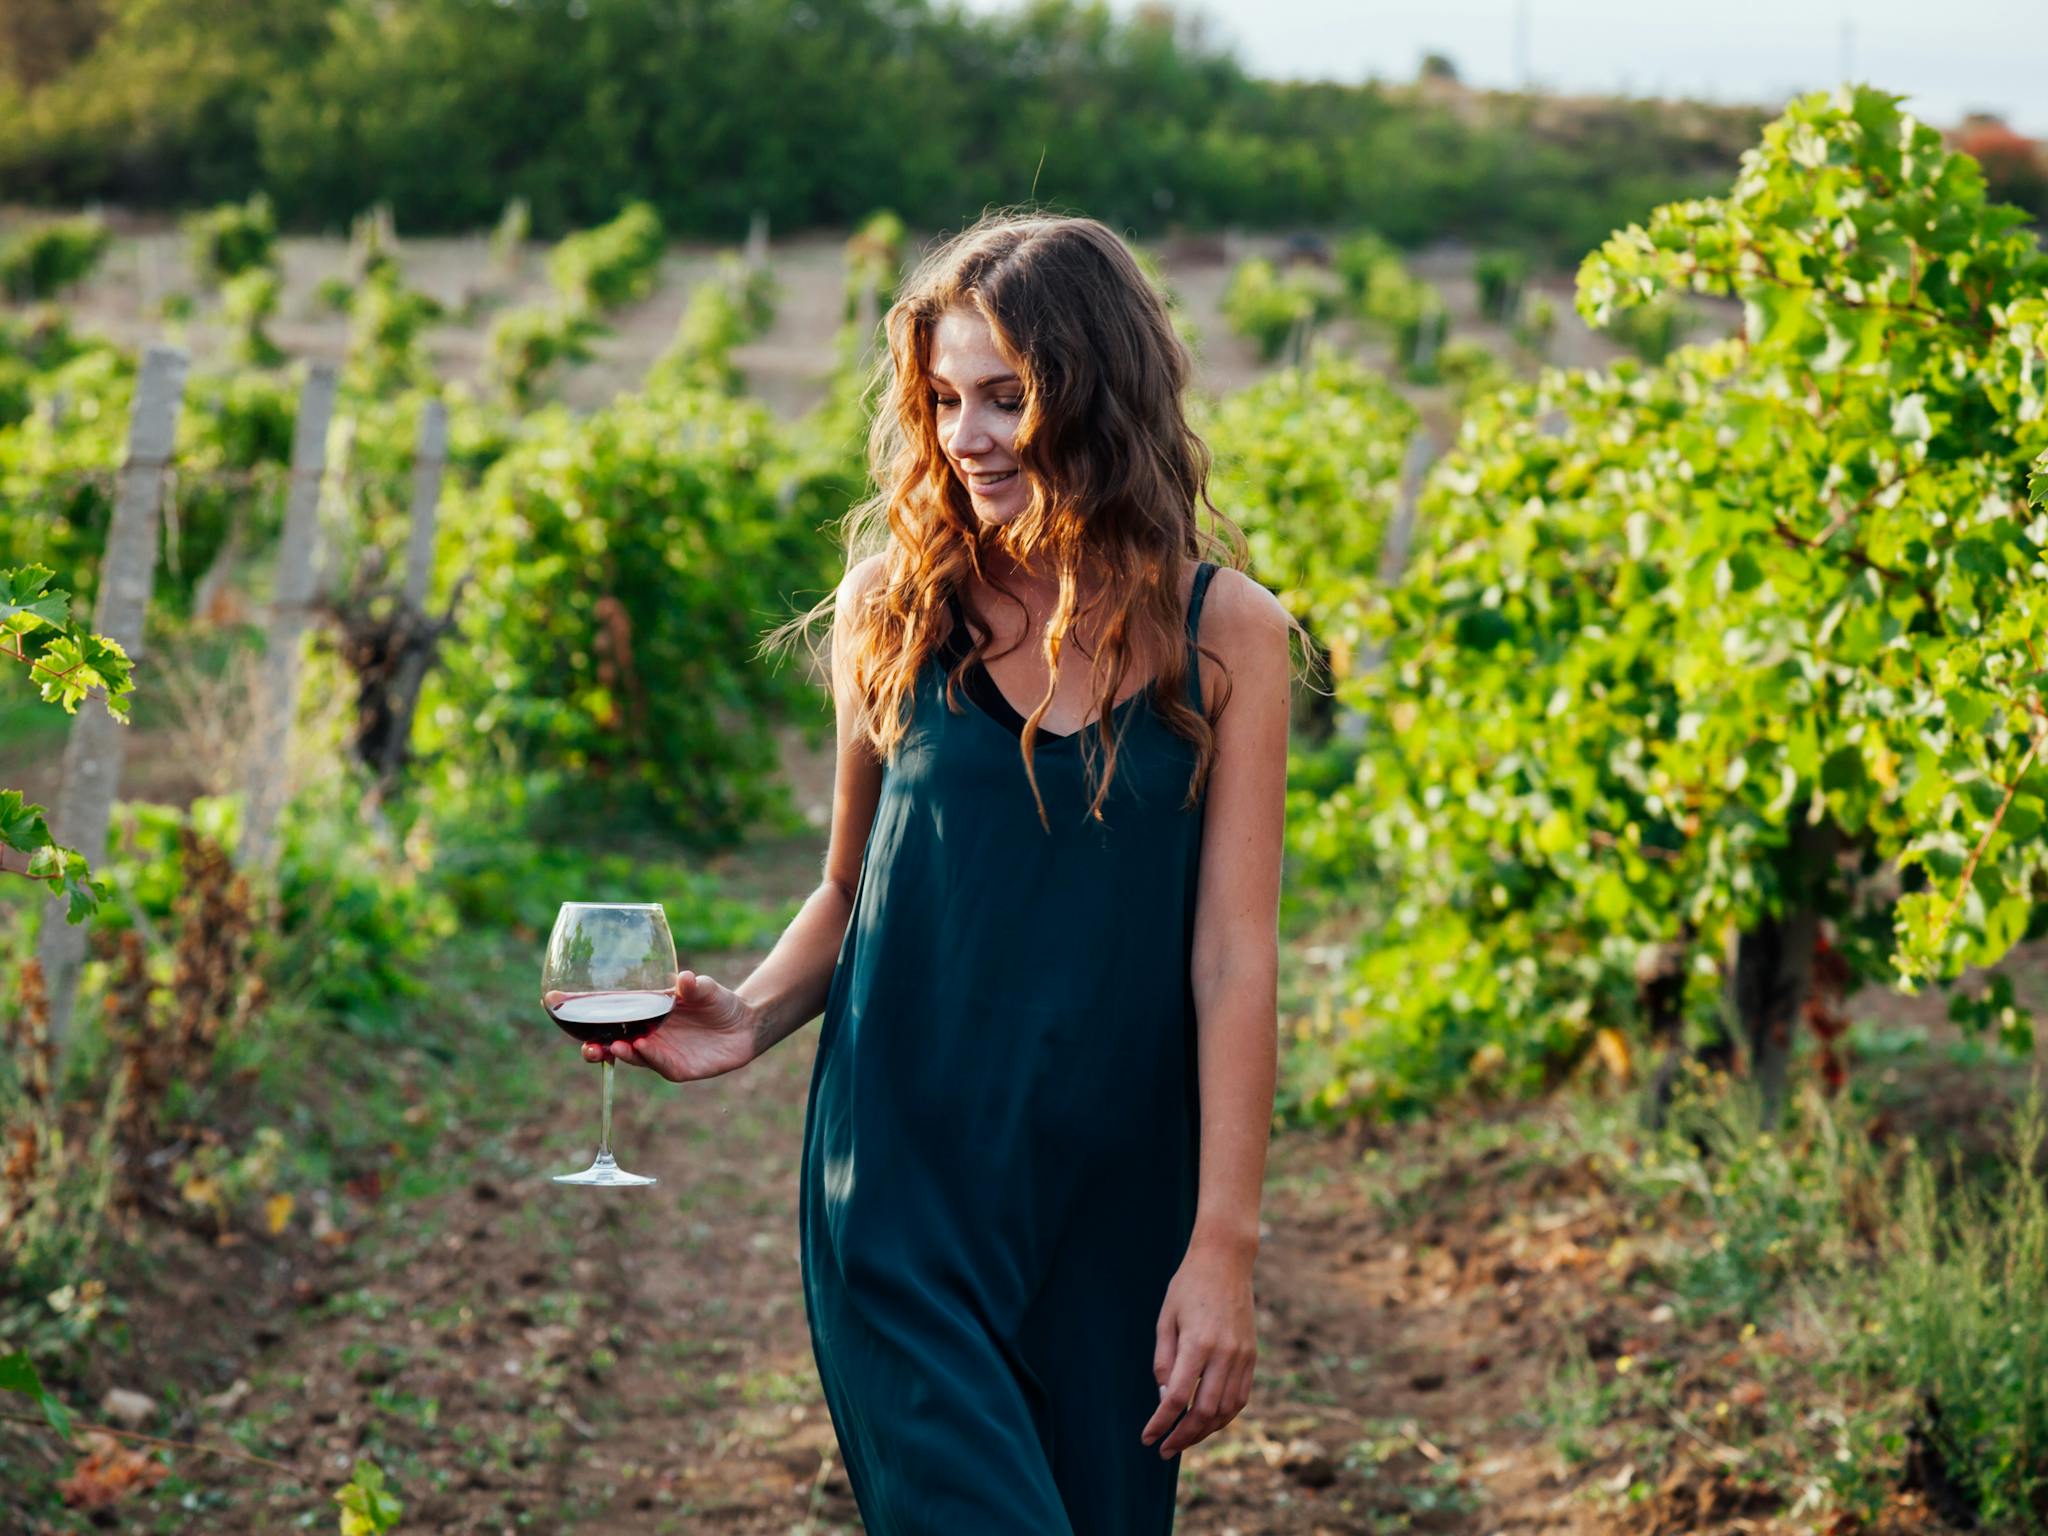 Enjoying a glass of wine strolling in the vineyard